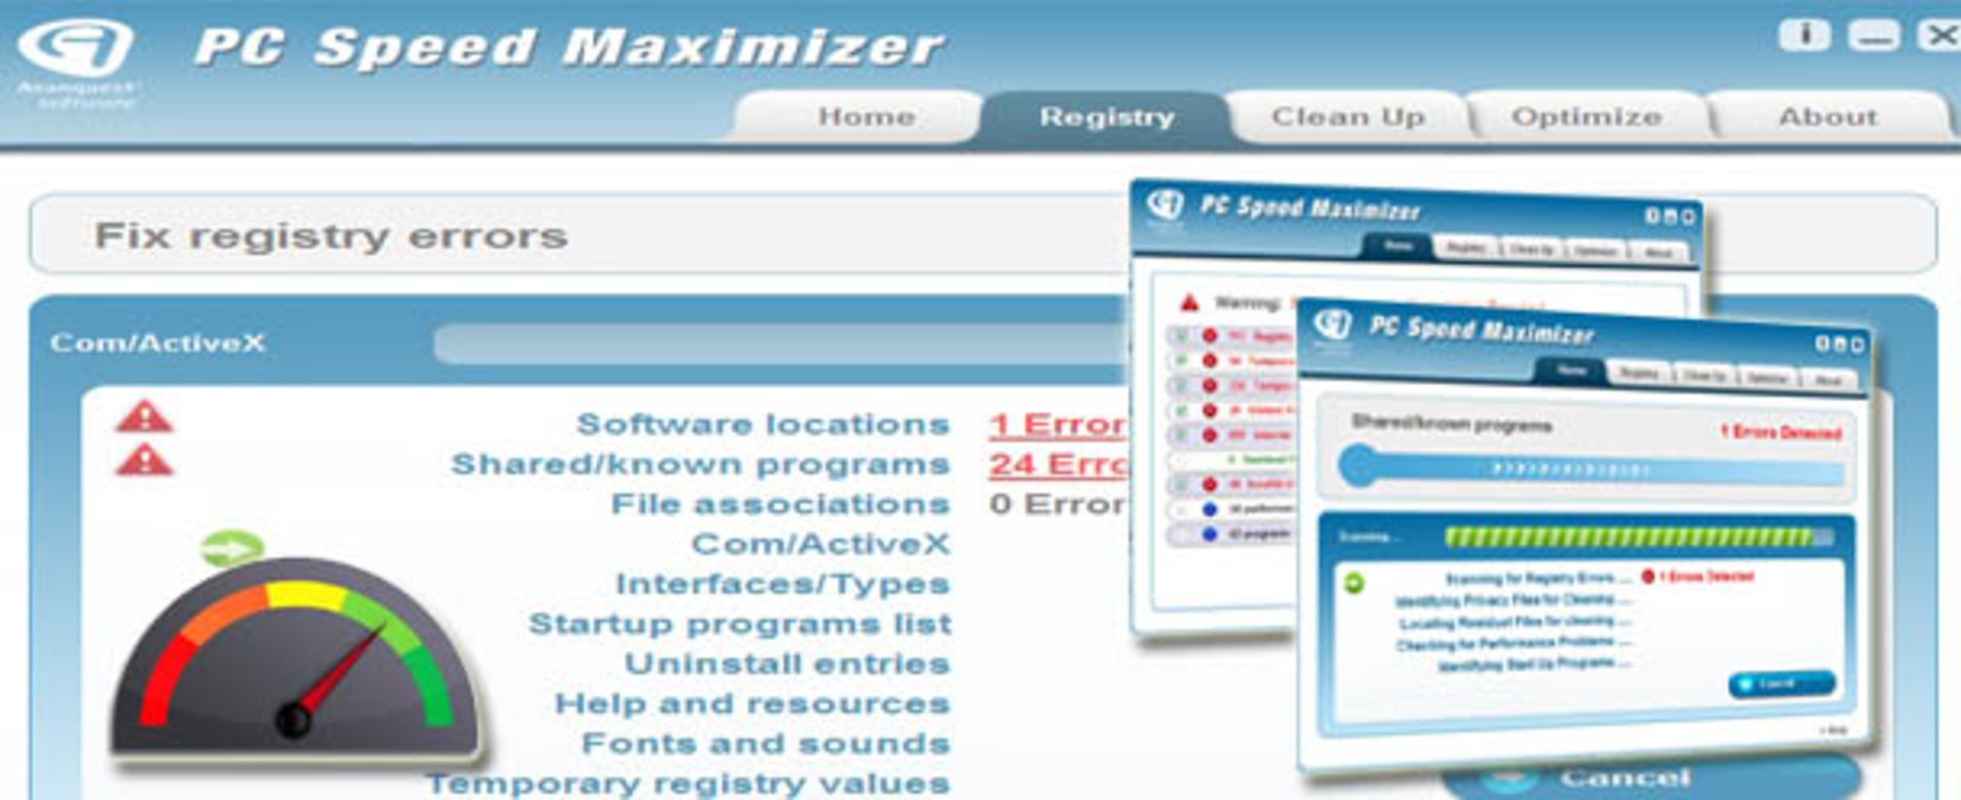 PC Speed Maximizer 2.1 for Windows Screenshot 1